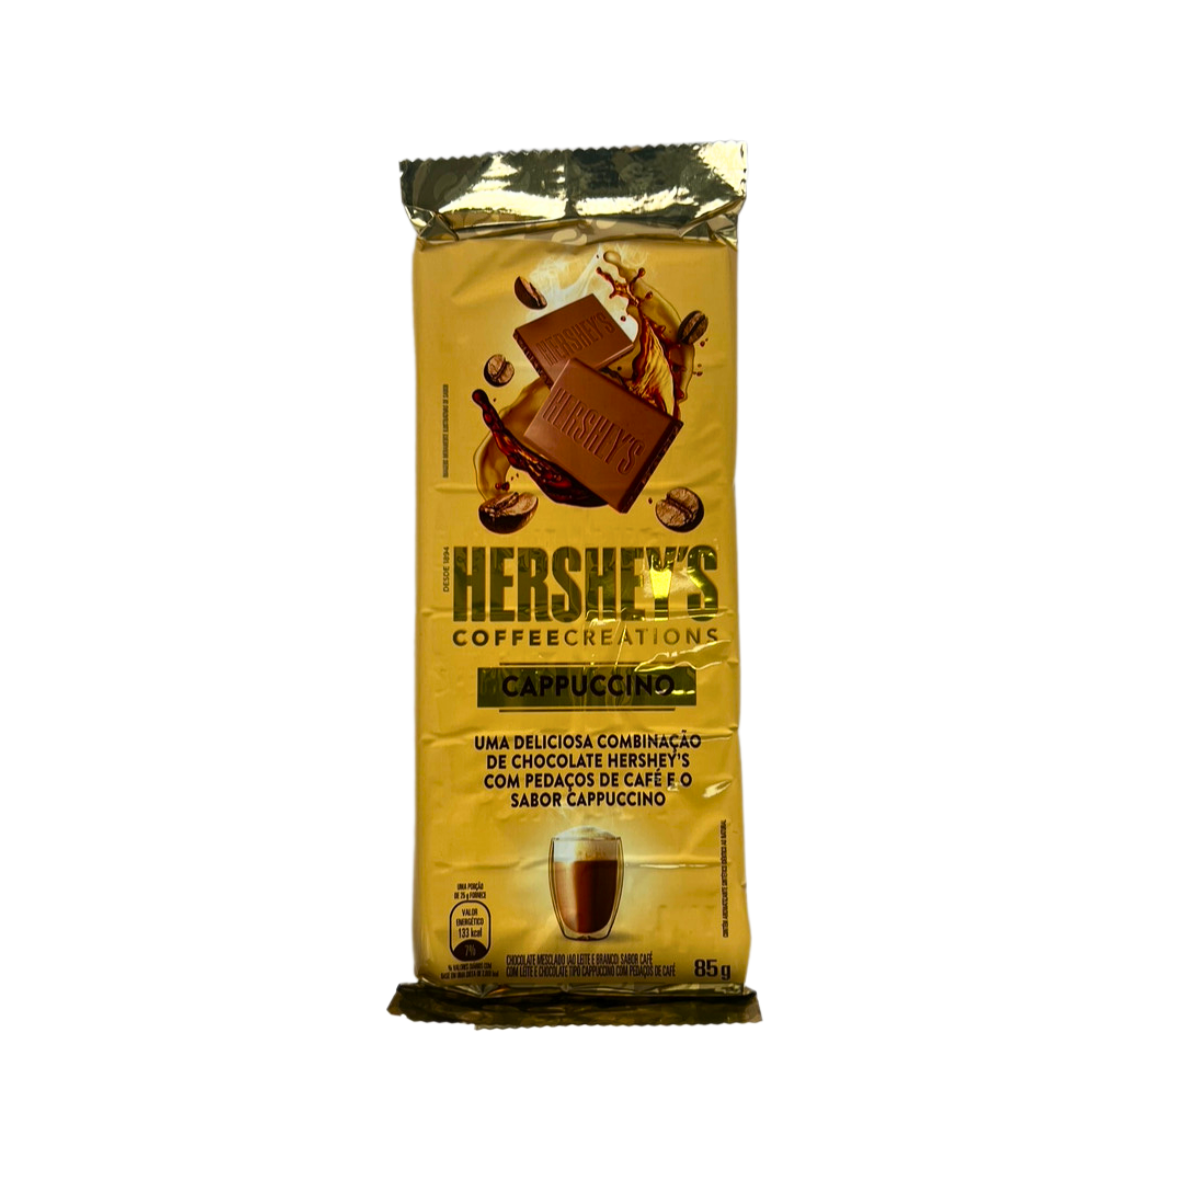 Hershey bar - Cappuccino